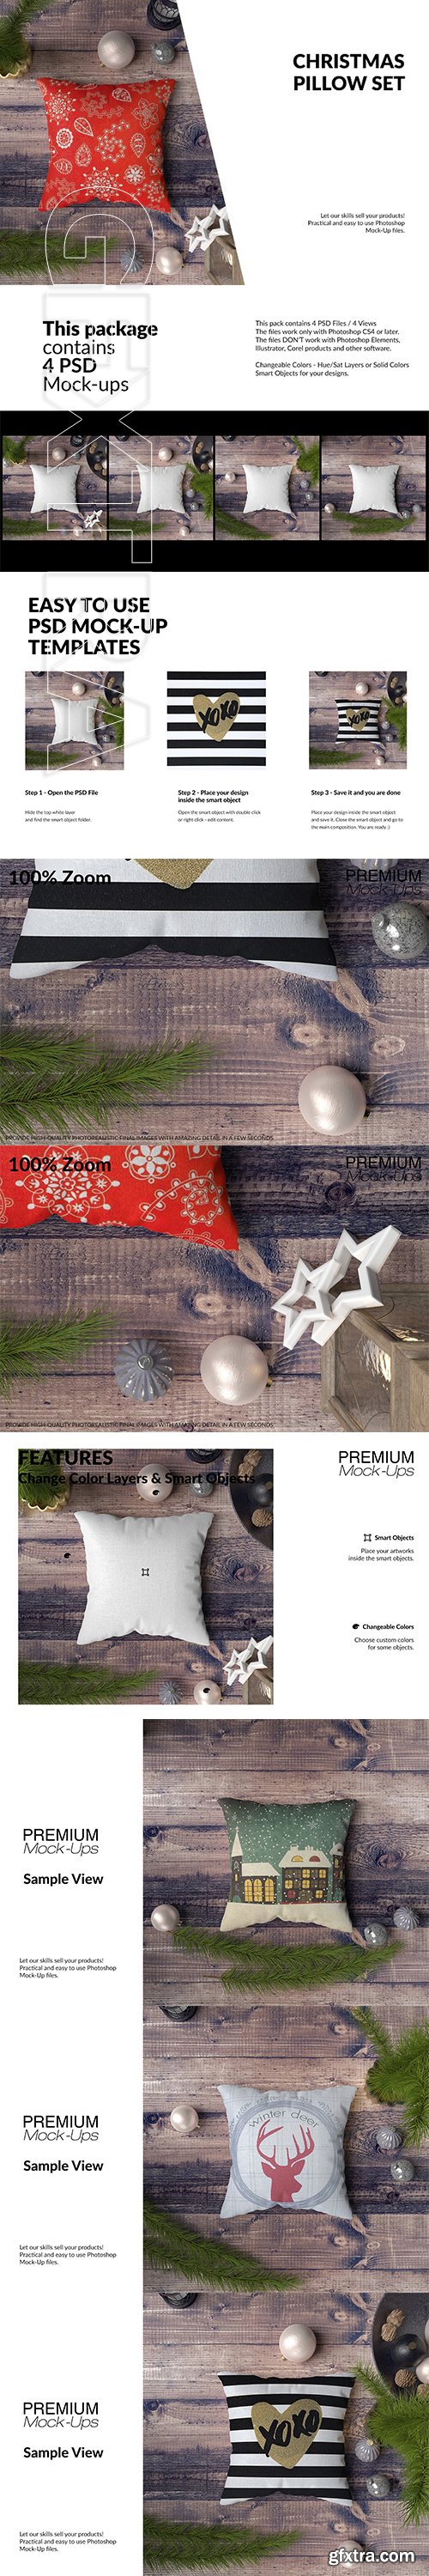 CreativeMarket - Christmas Pillow Set 3217528